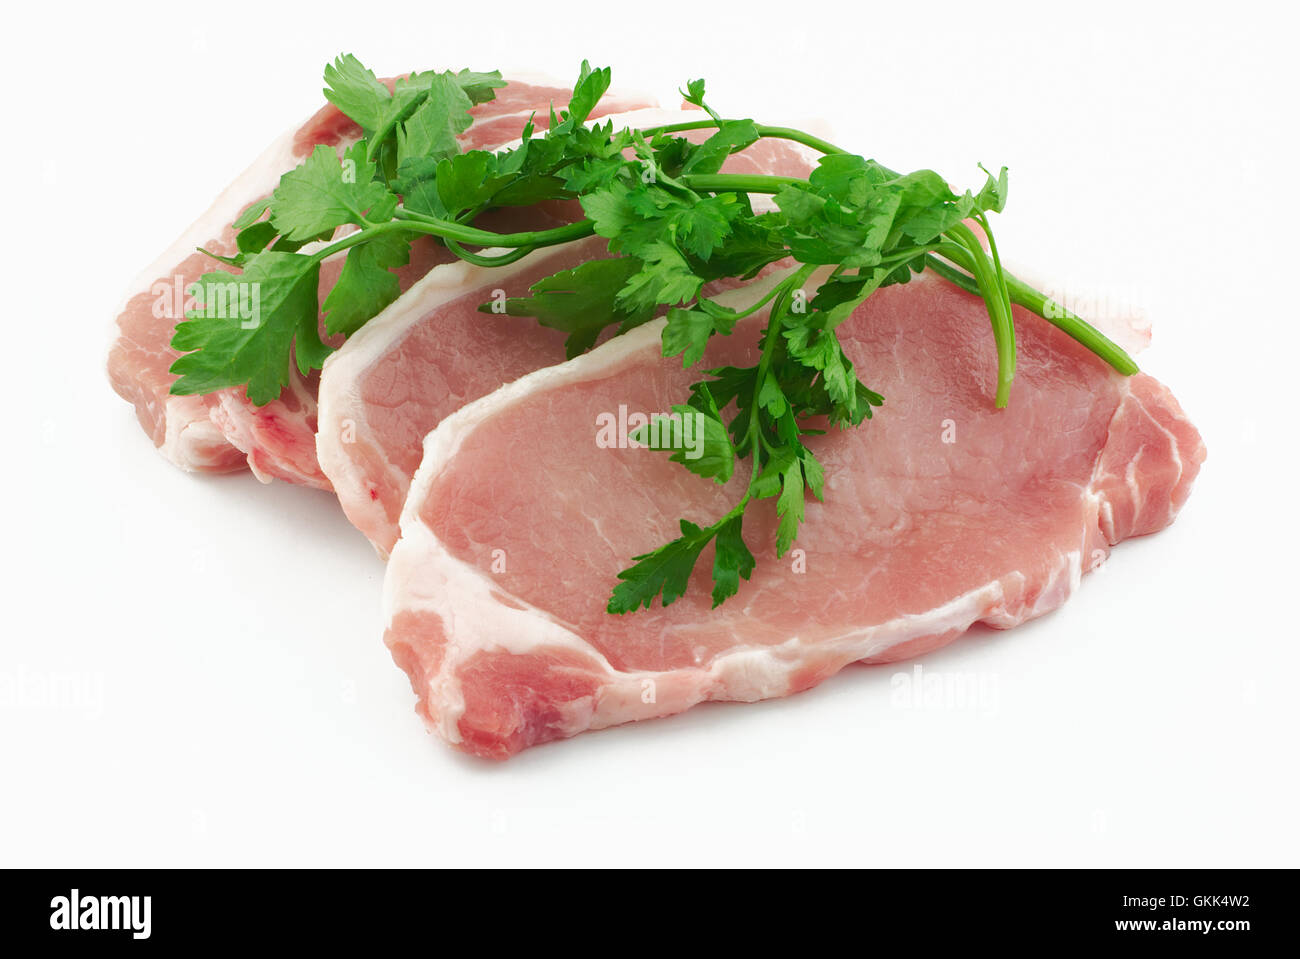 Pork loin steaks with herbs Stock Photo